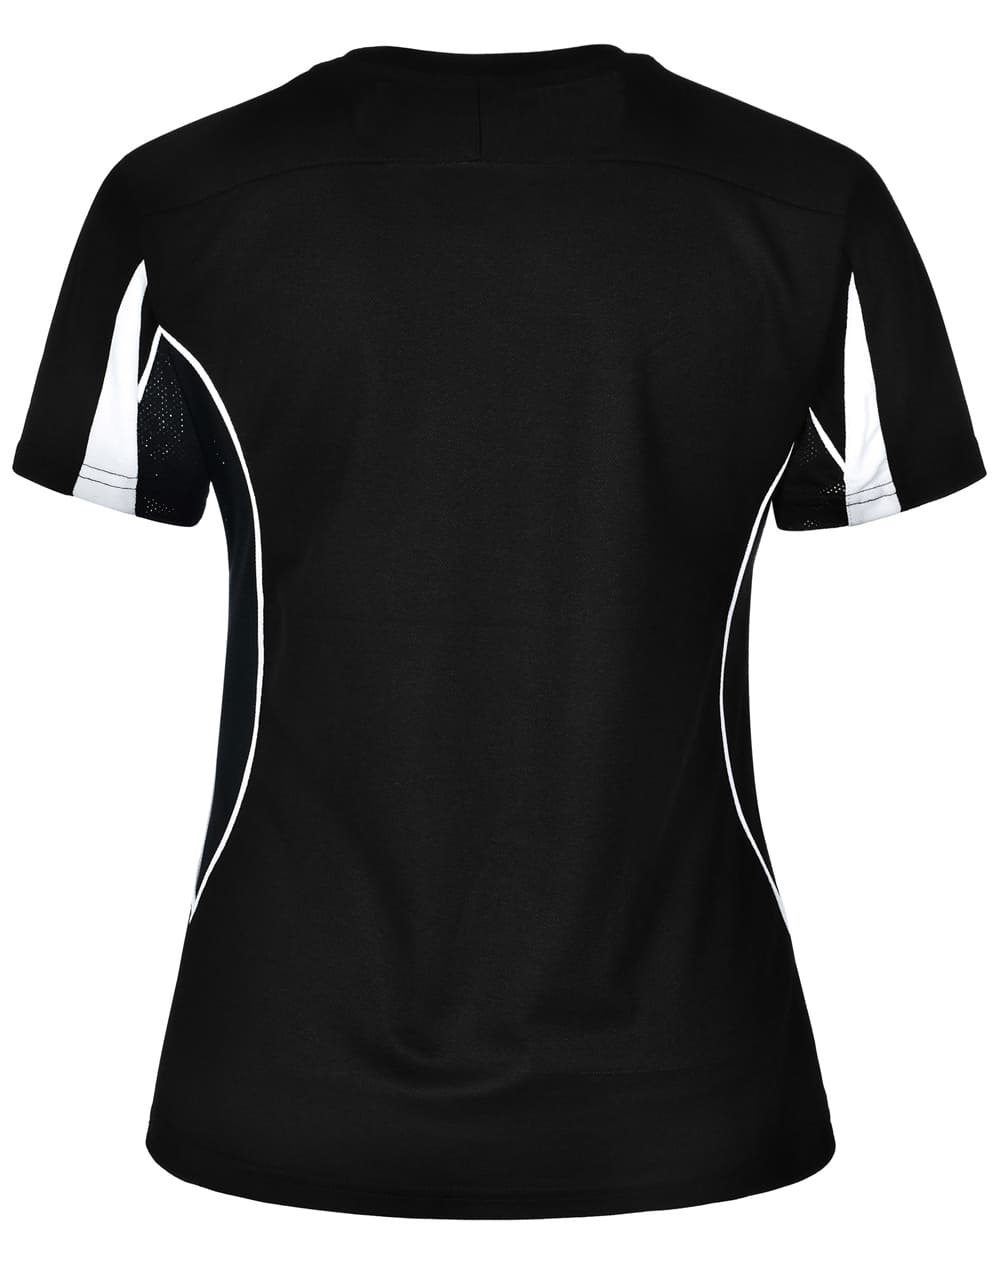 Custom Made (Navy White) Legend Ladies Short Sleeve Tee Shirts Online in Perth